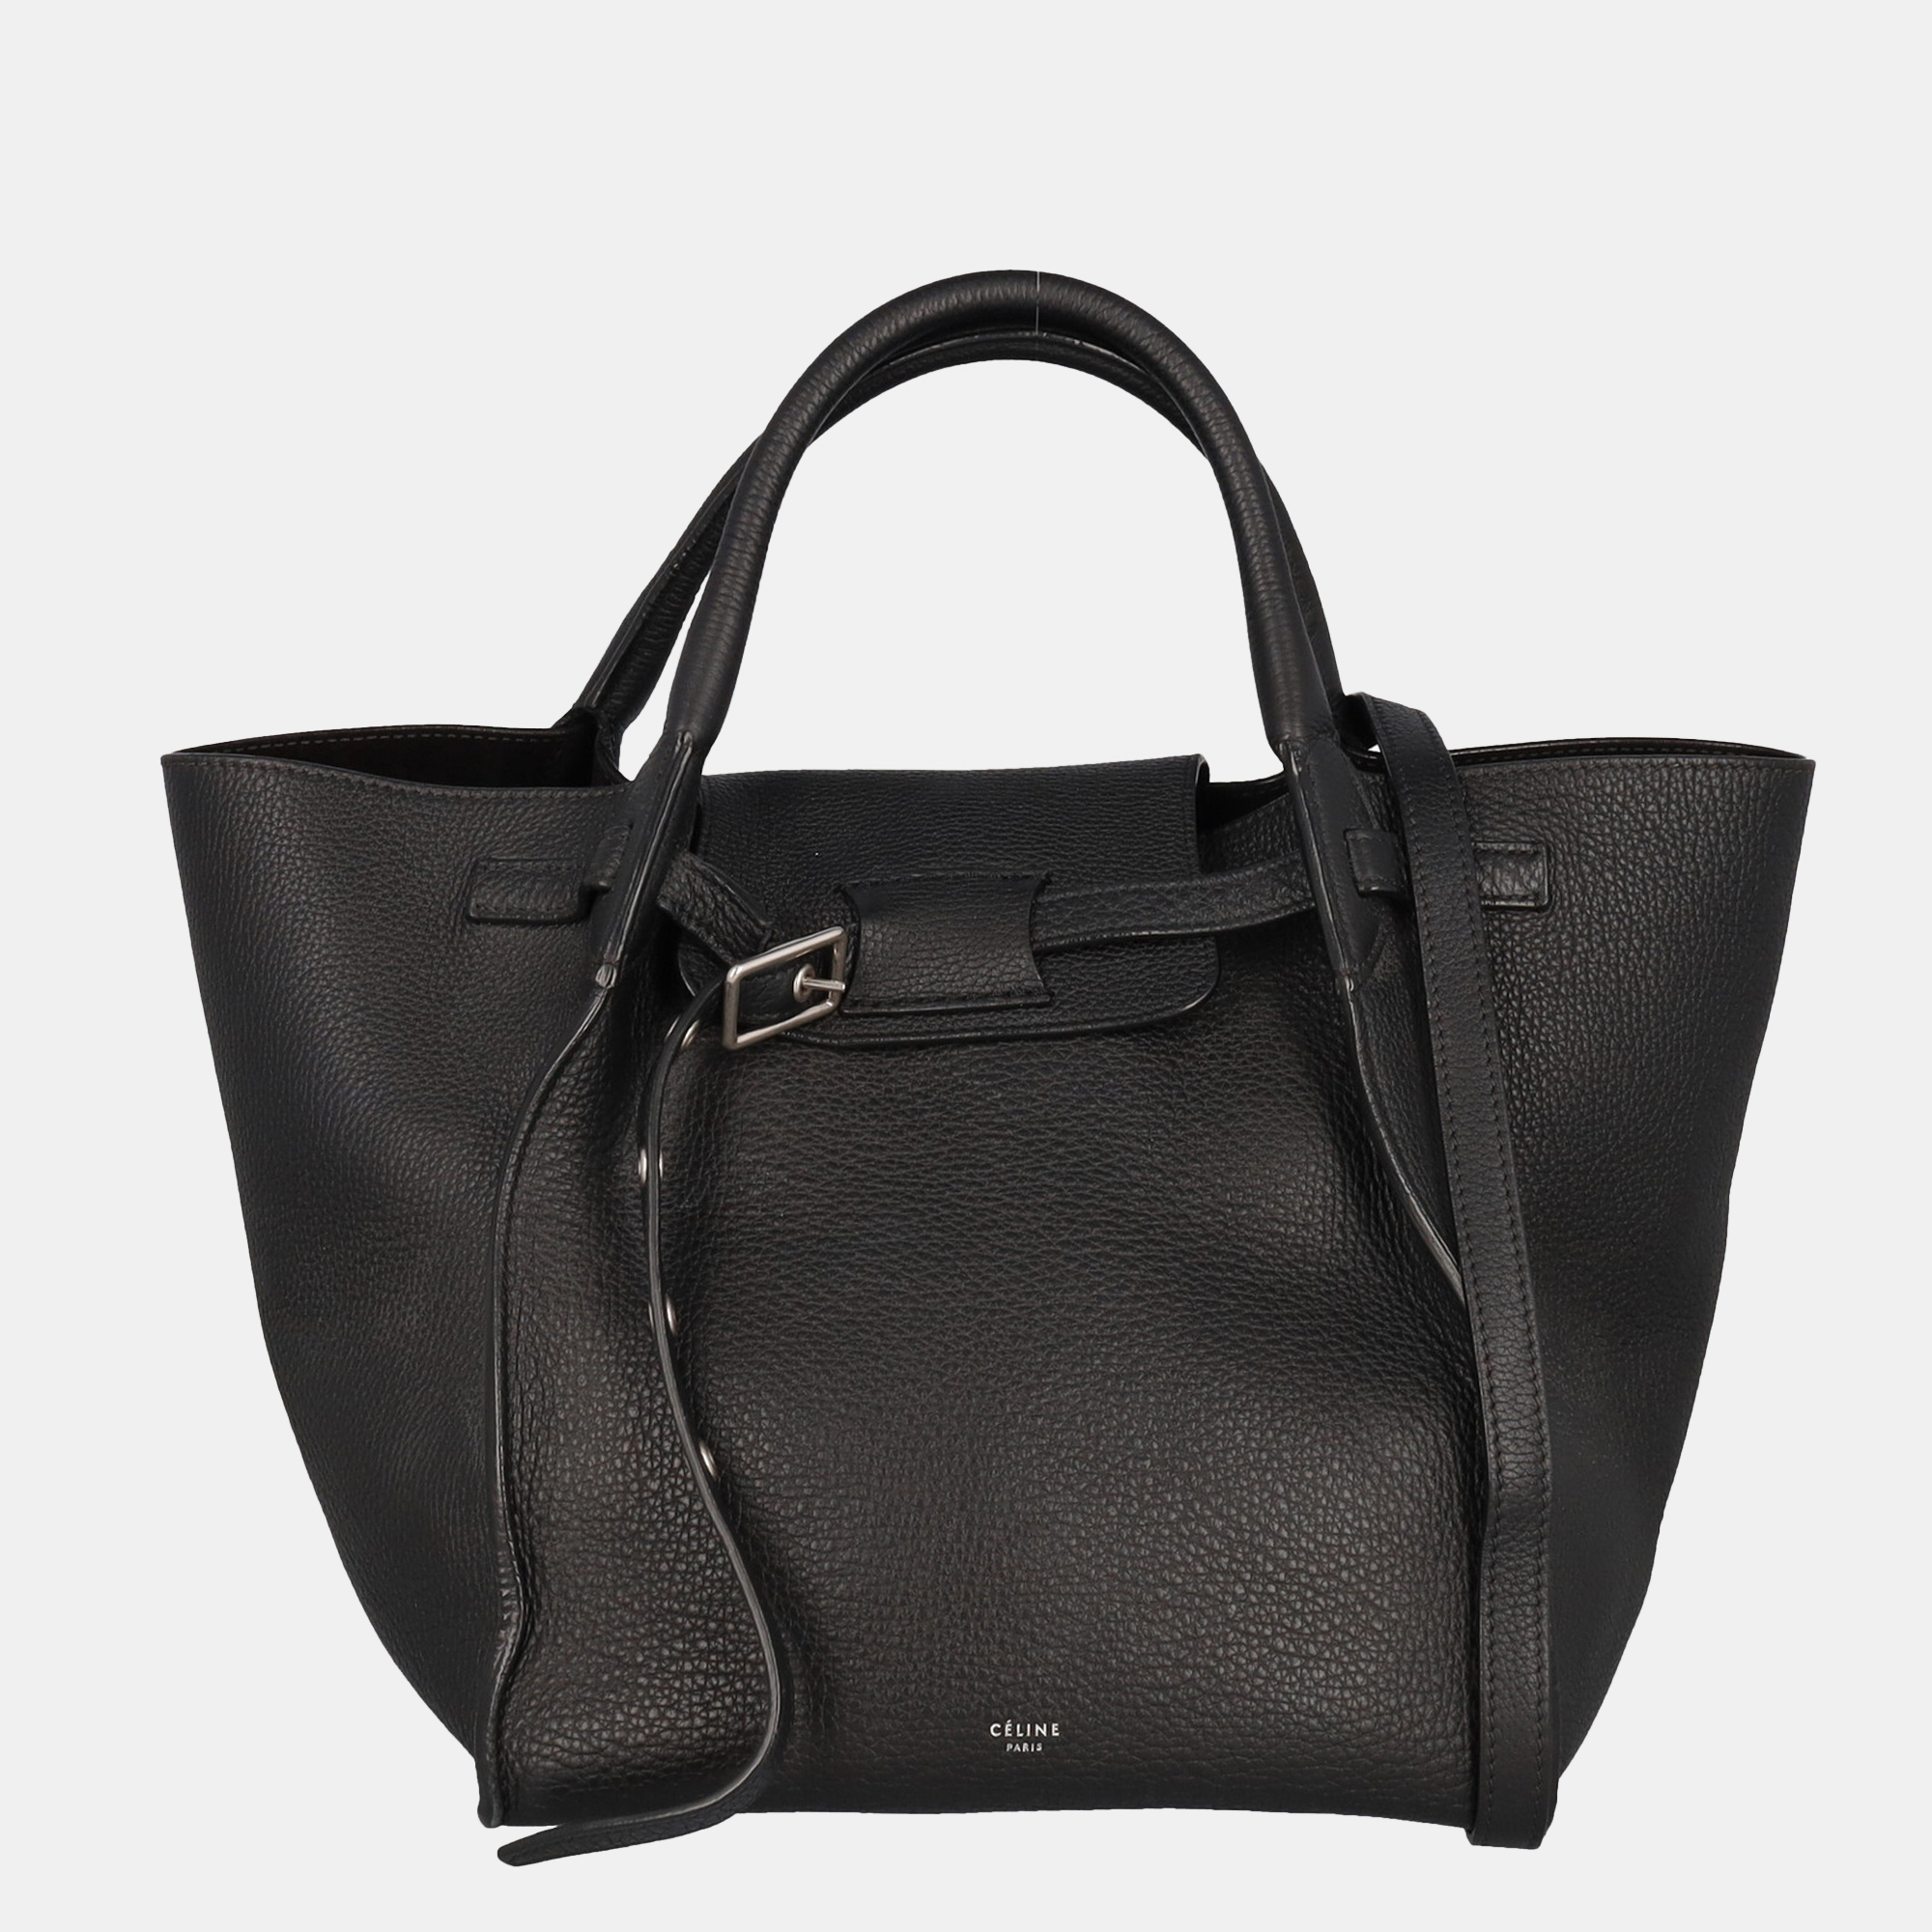 Celine  Women's Leather Bag - Black - One Size